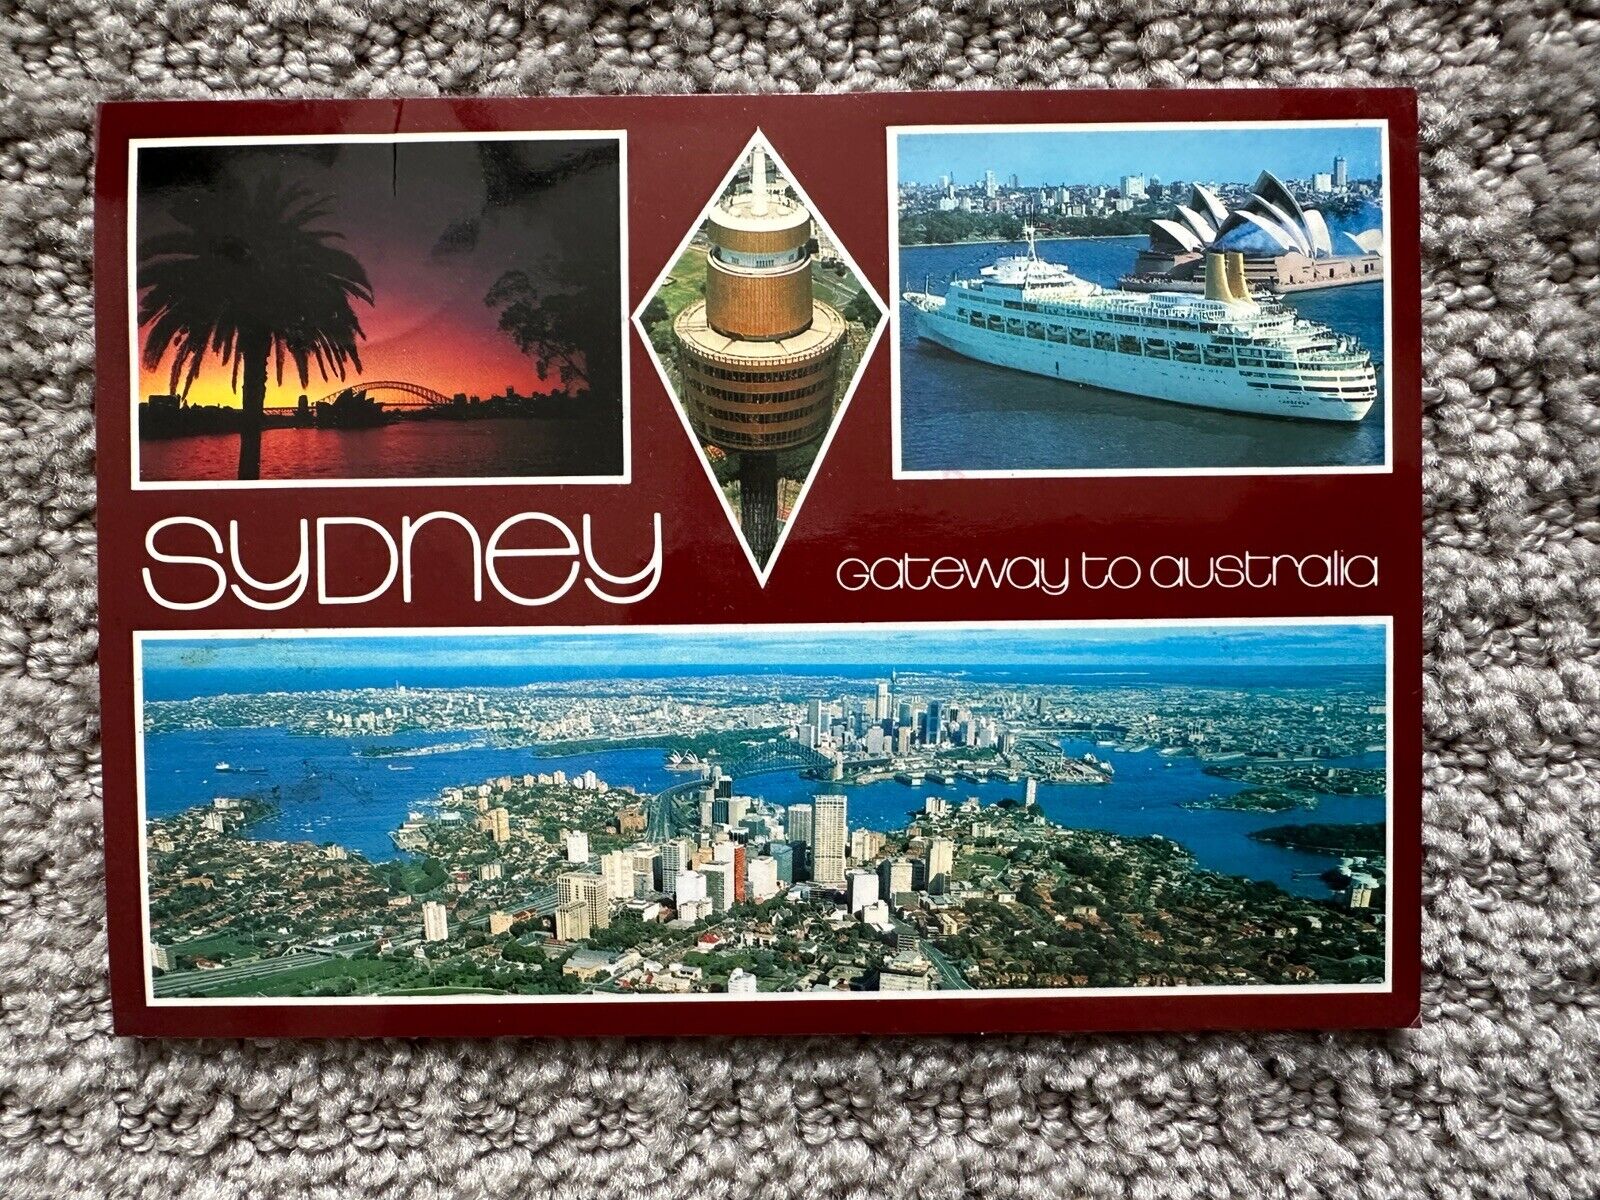 P&O tss Canberra Cruise Ship On Sydney Australia Postcard, Used